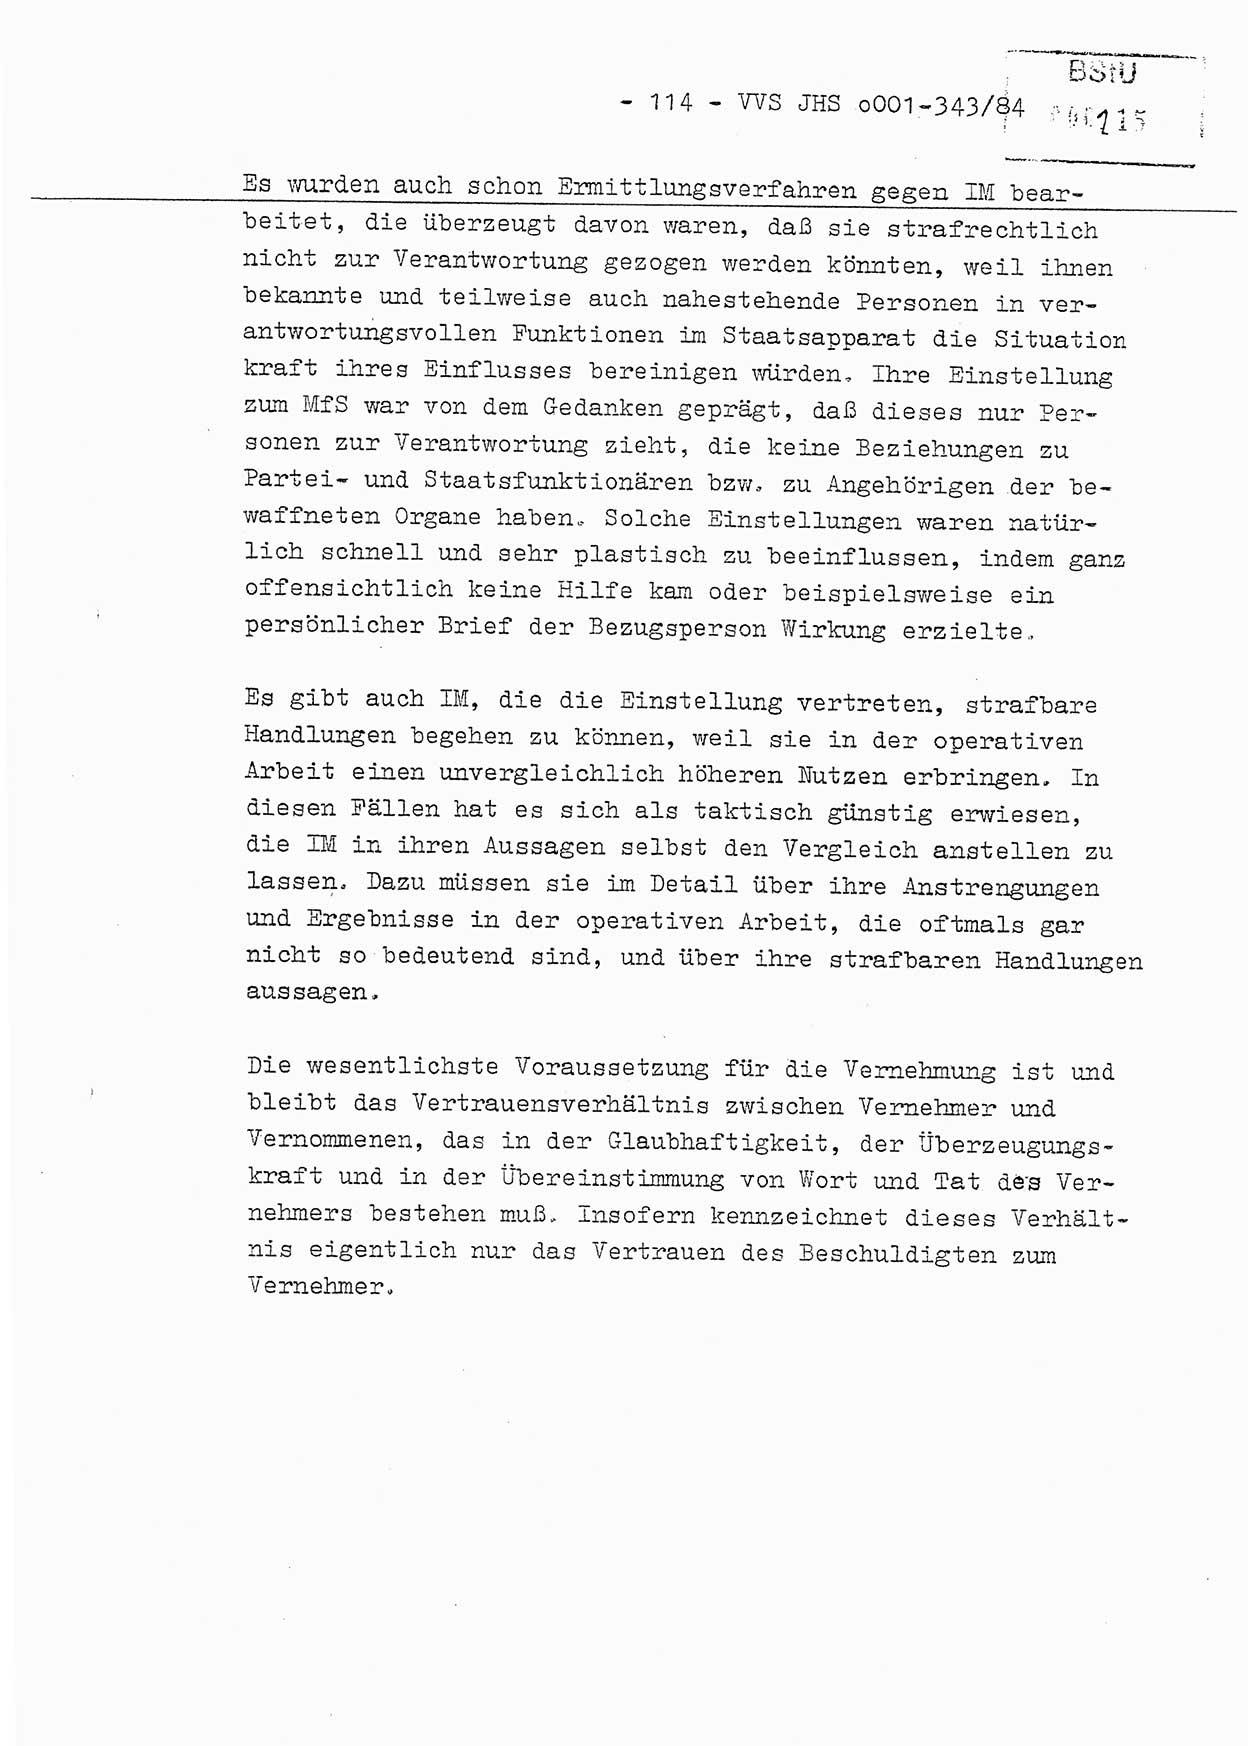 Diplomarbeit, Oberleutnant Bernd Michael (HA Ⅸ/5), Oberleutnant Peter Felber (HA IX/5), Ministerium für Staatssicherheit (MfS) [Deutsche Demokratische Republik (DDR)], Juristische Hochschule (JHS), Vertrauliche Verschlußsache (VVS) o001-343/84, Potsdam 1985, Seite 114 (Dipl.-Arb. MfS DDR JHS VVS o001-343/84 1985, S. 114)